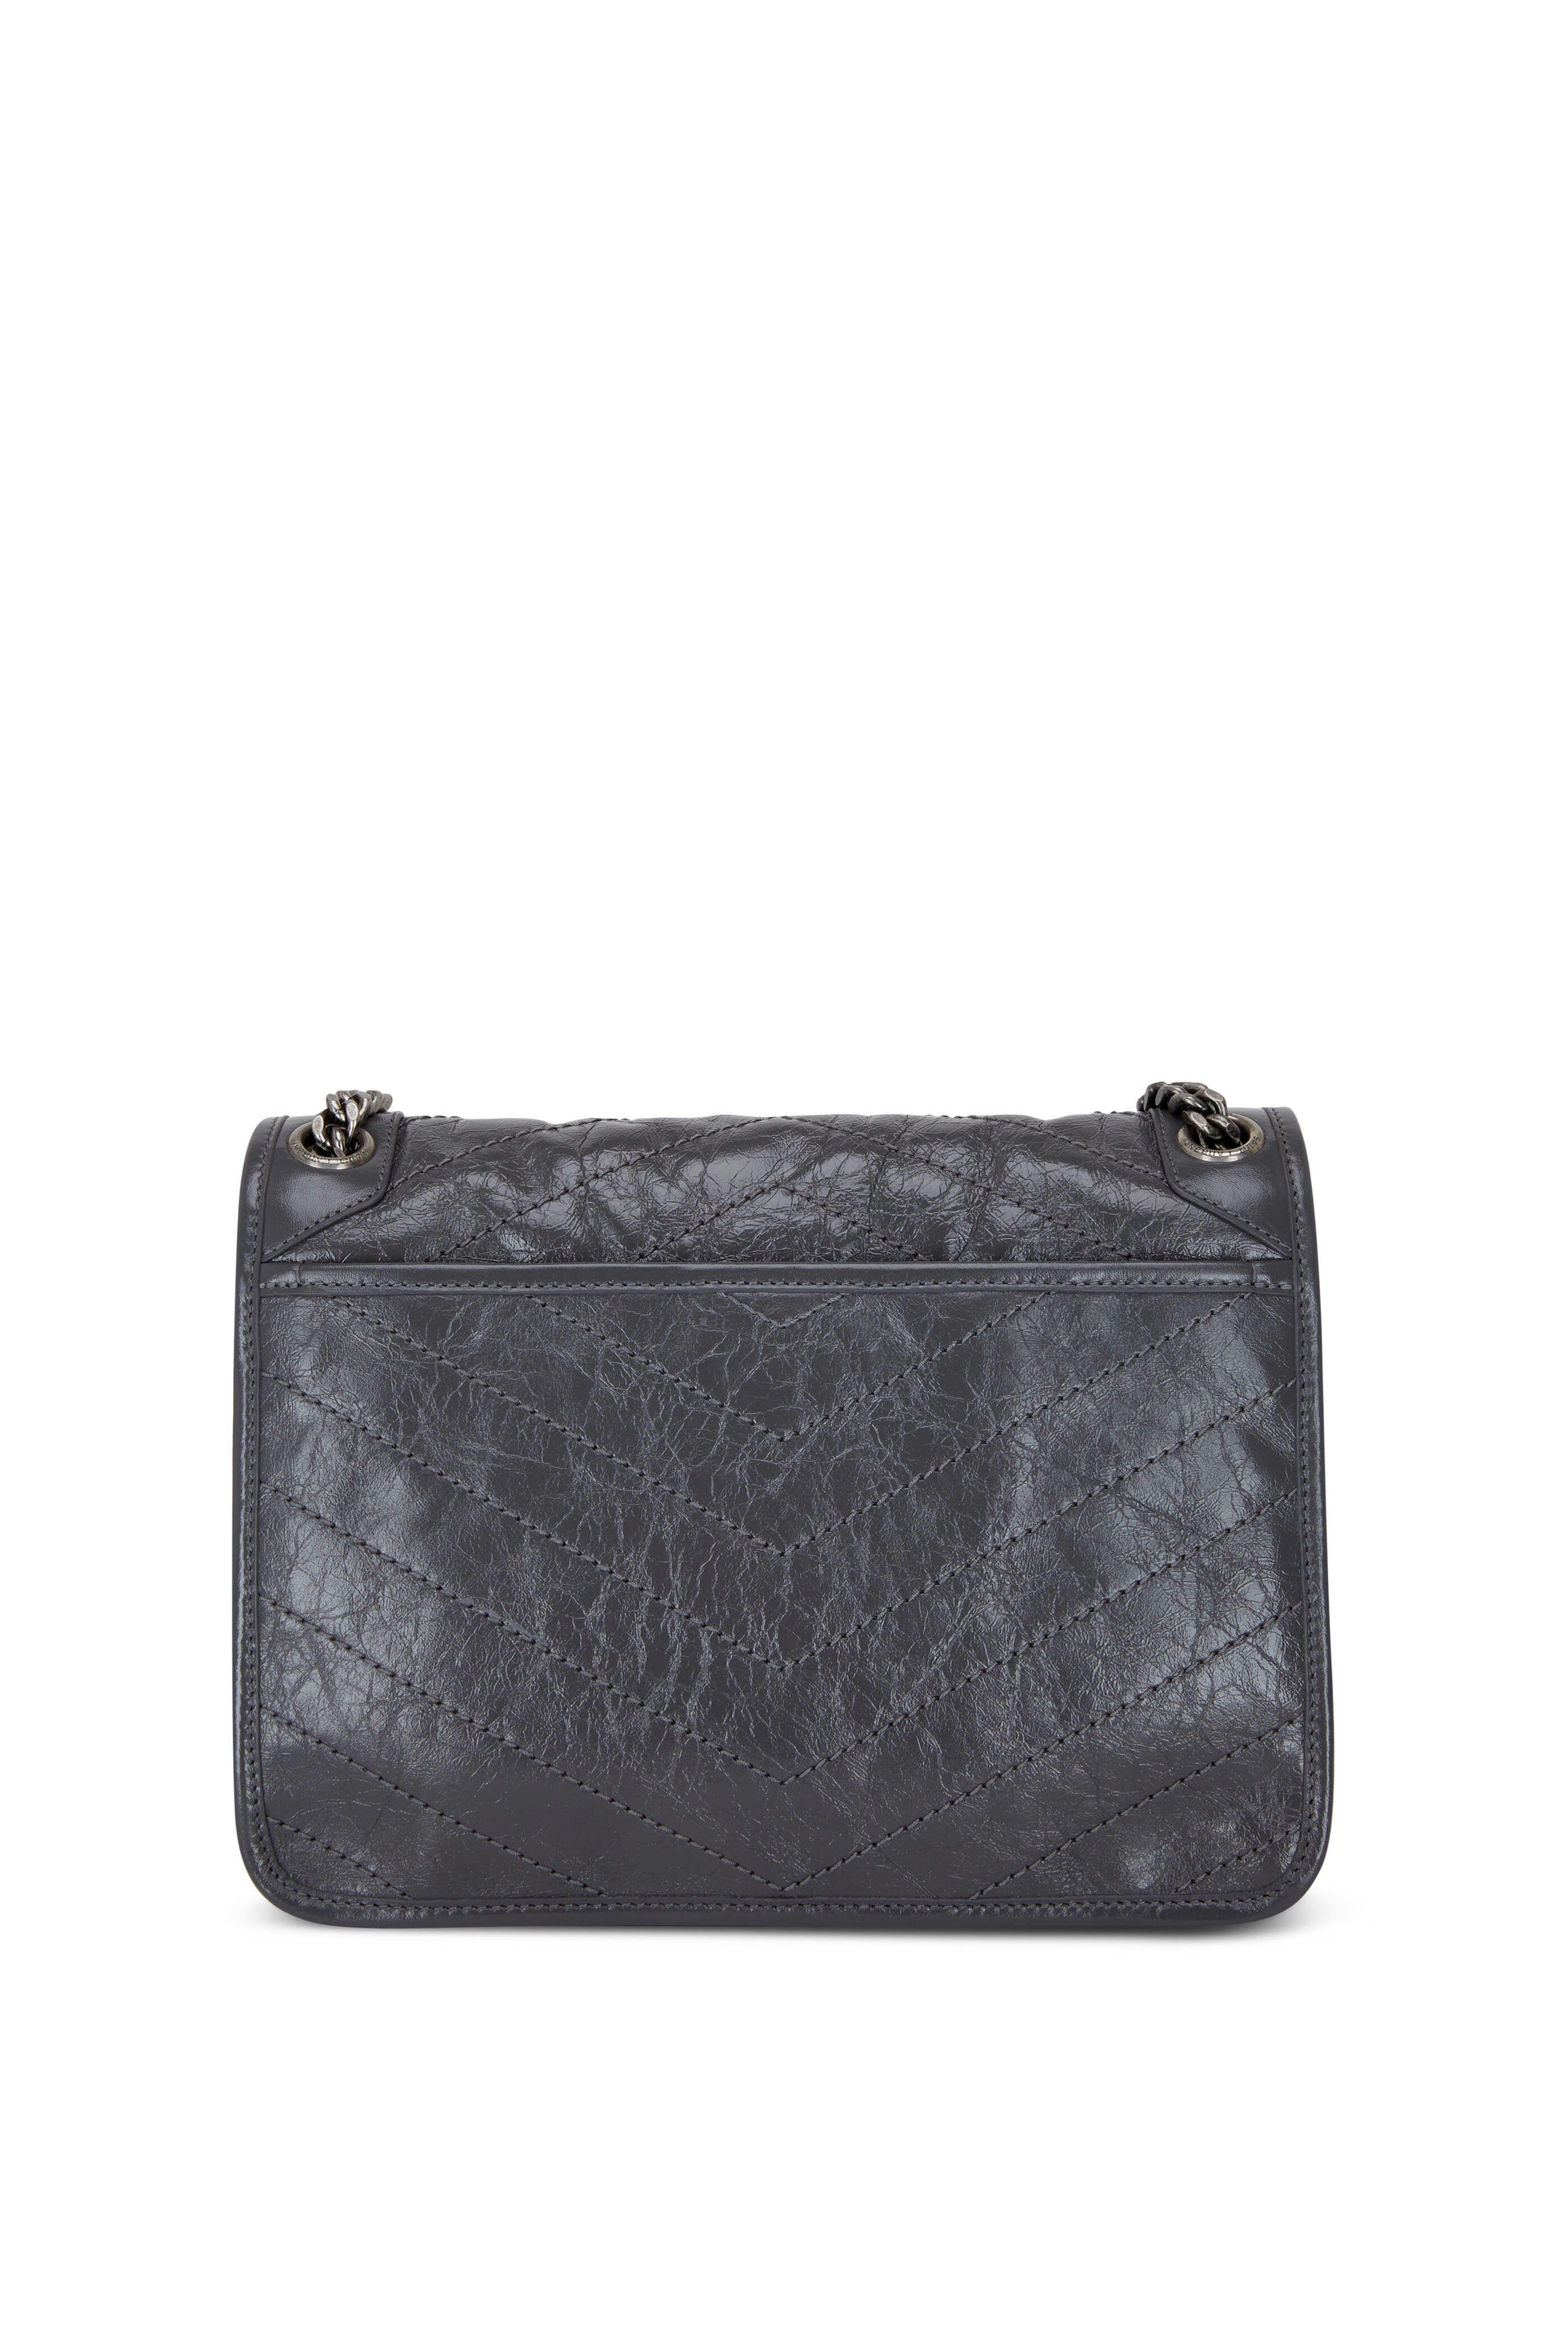 Saint Laurent - Niki Storm Gray Crinkle Leather Medium Bag